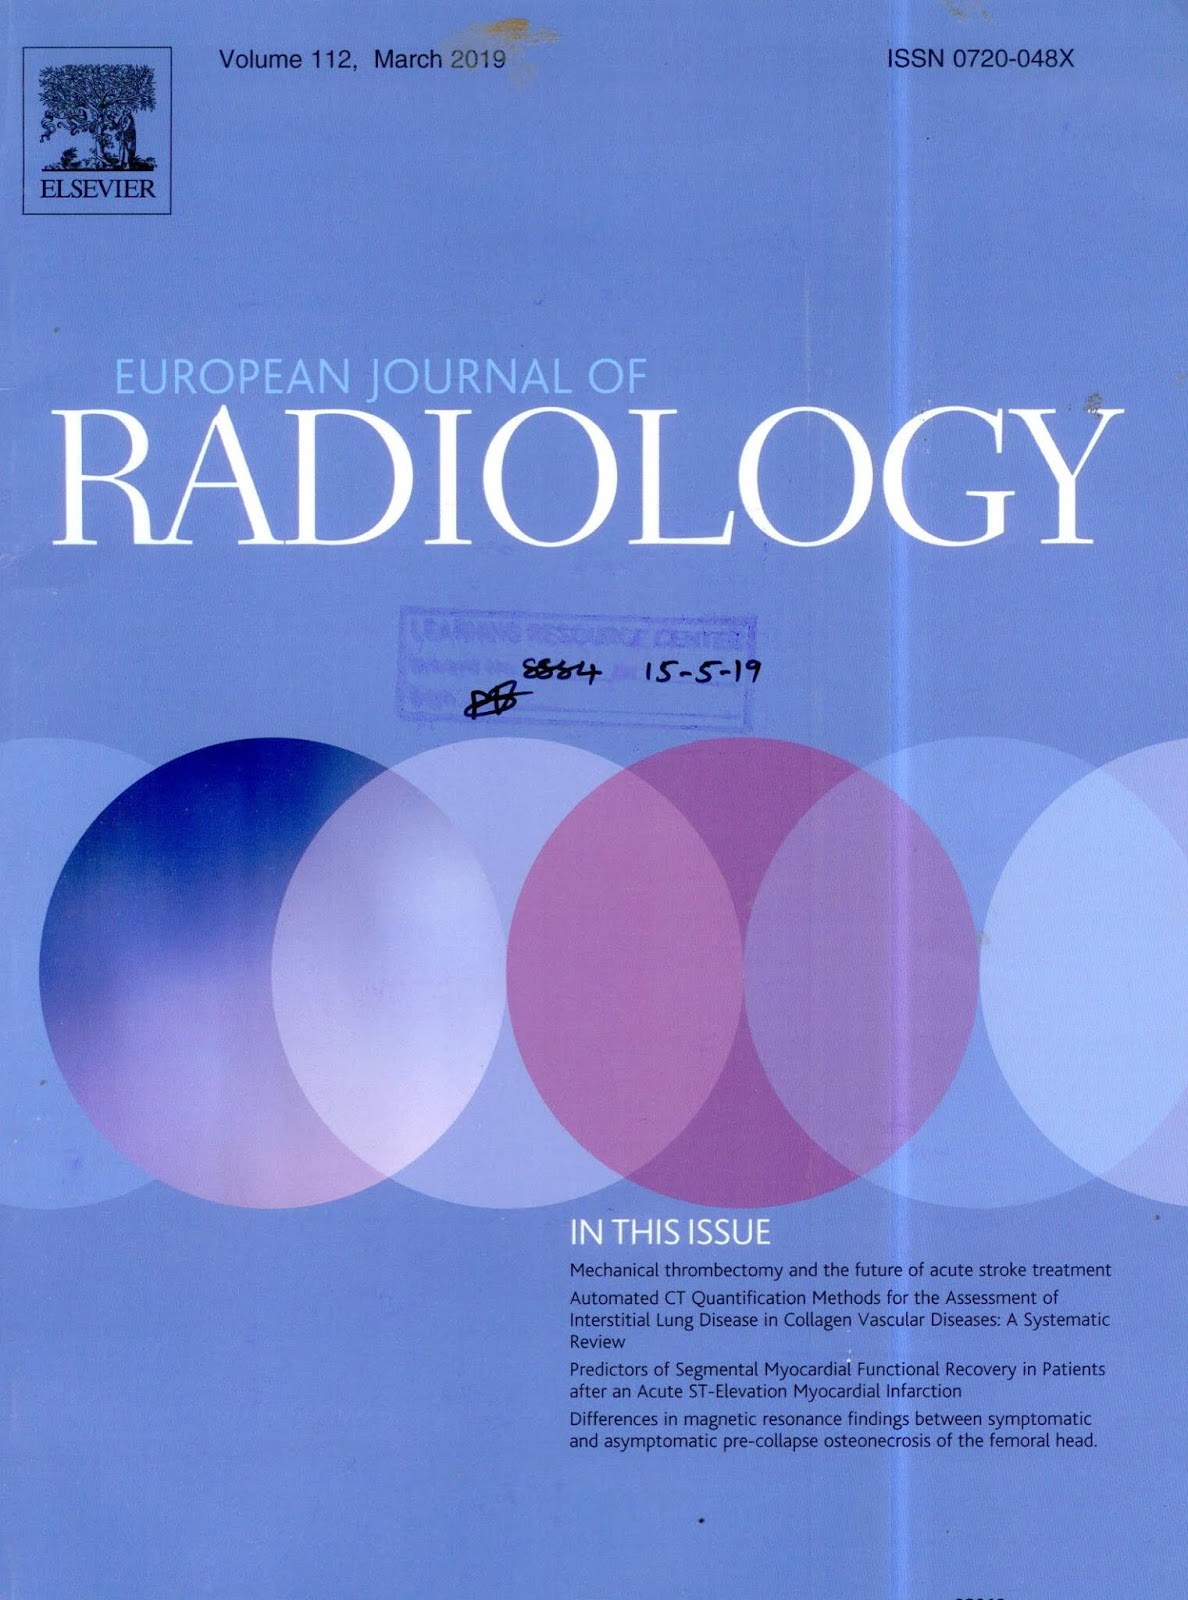 https://www.ejradiology.com/issue/S0720-048X(19)X0002-9